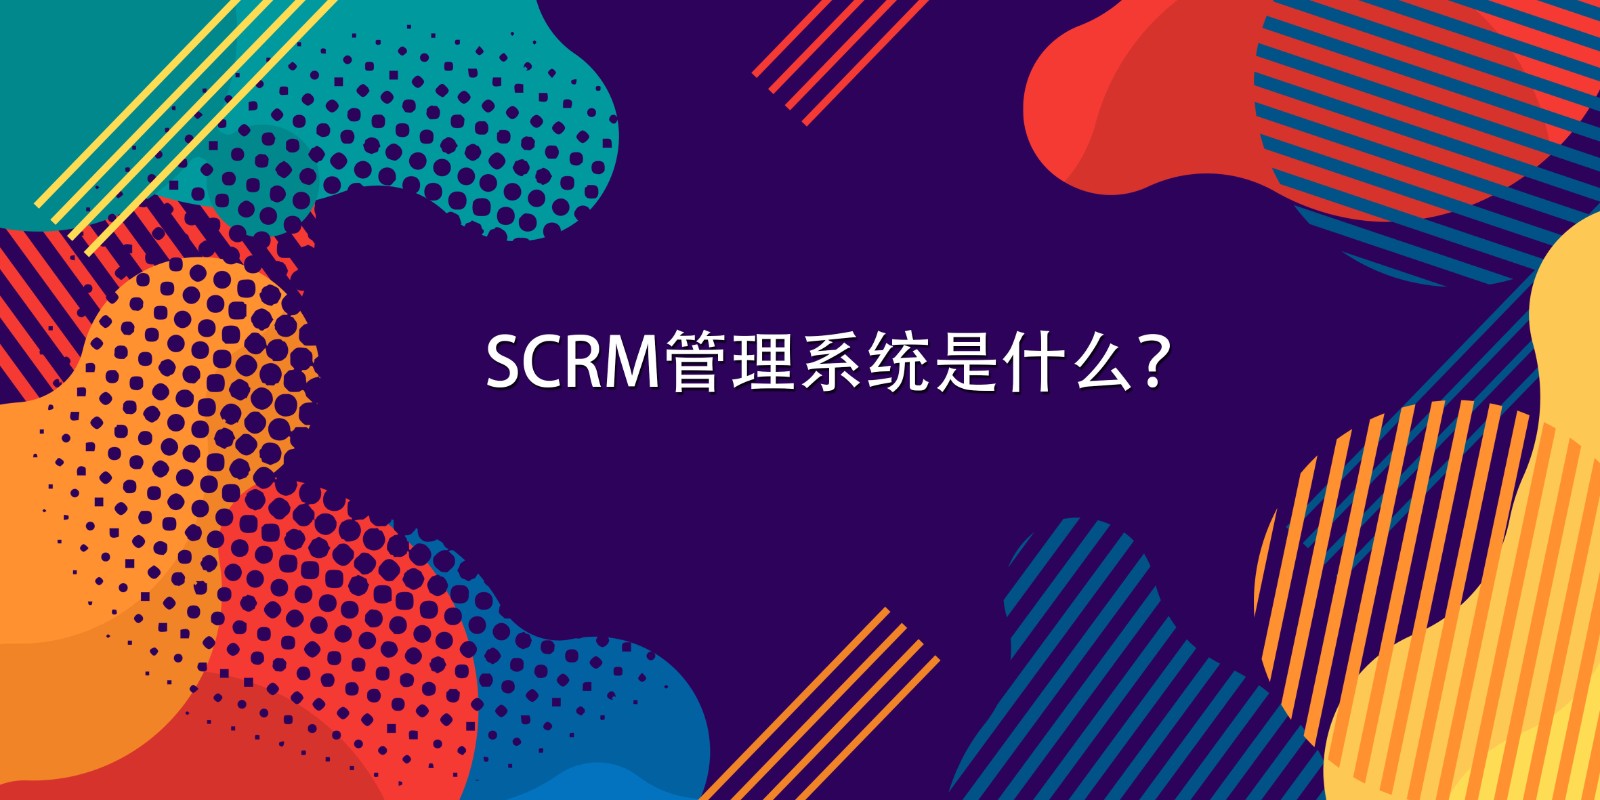 SCRM管理系统是什么？